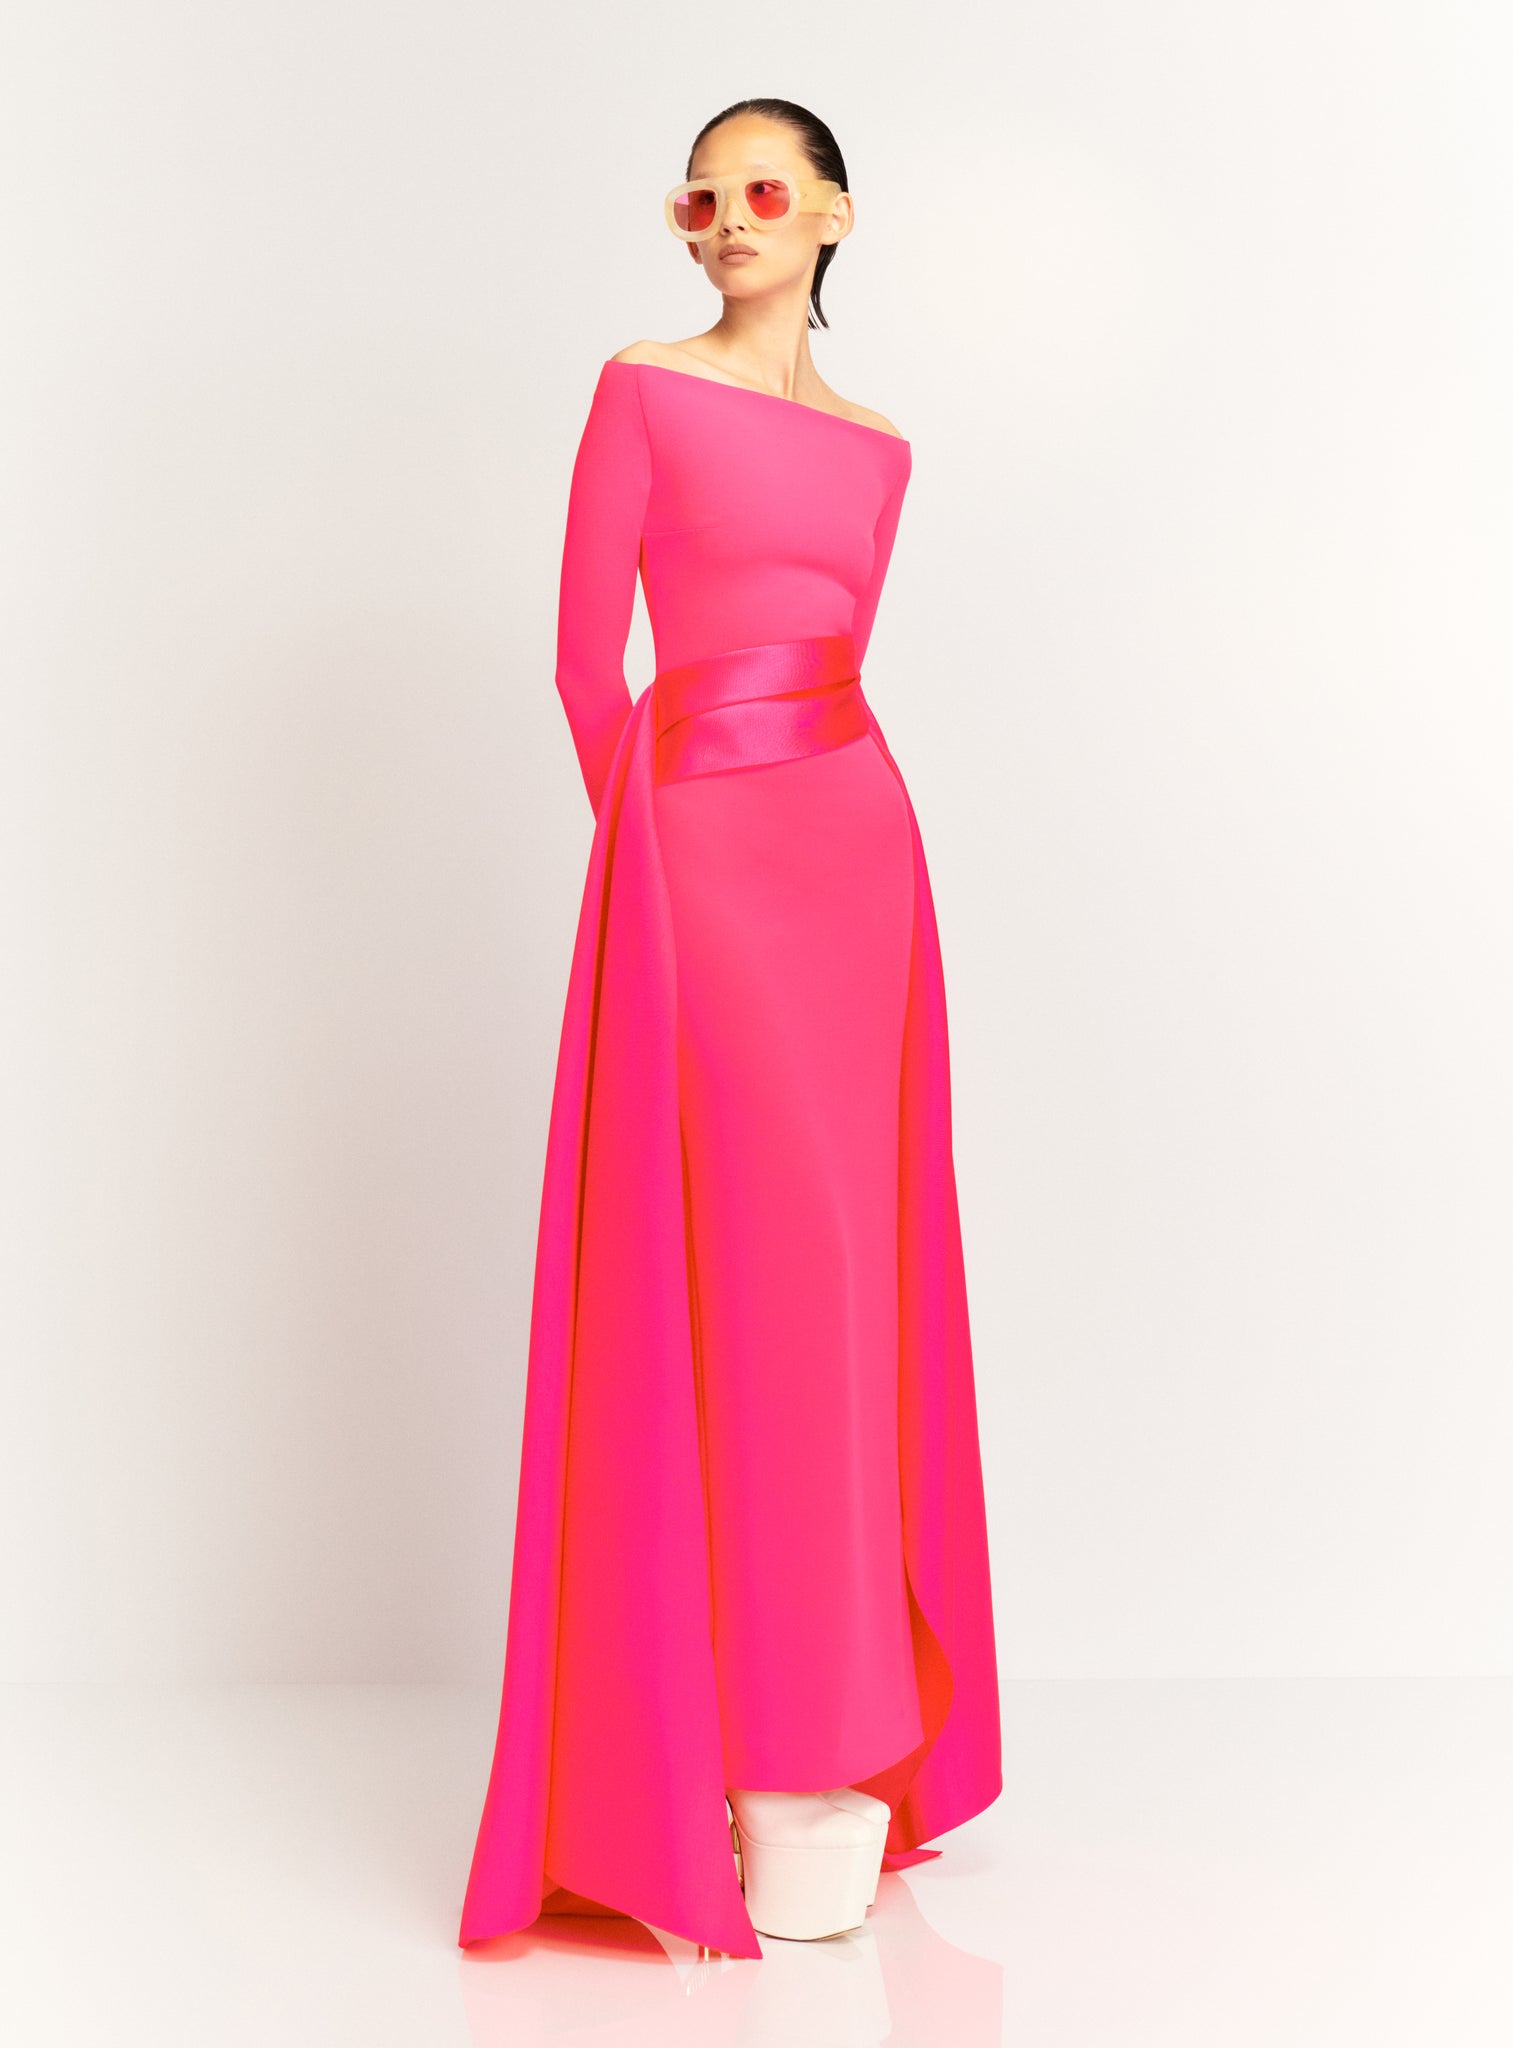 The Irma Maxi Dress in Ultra Pink